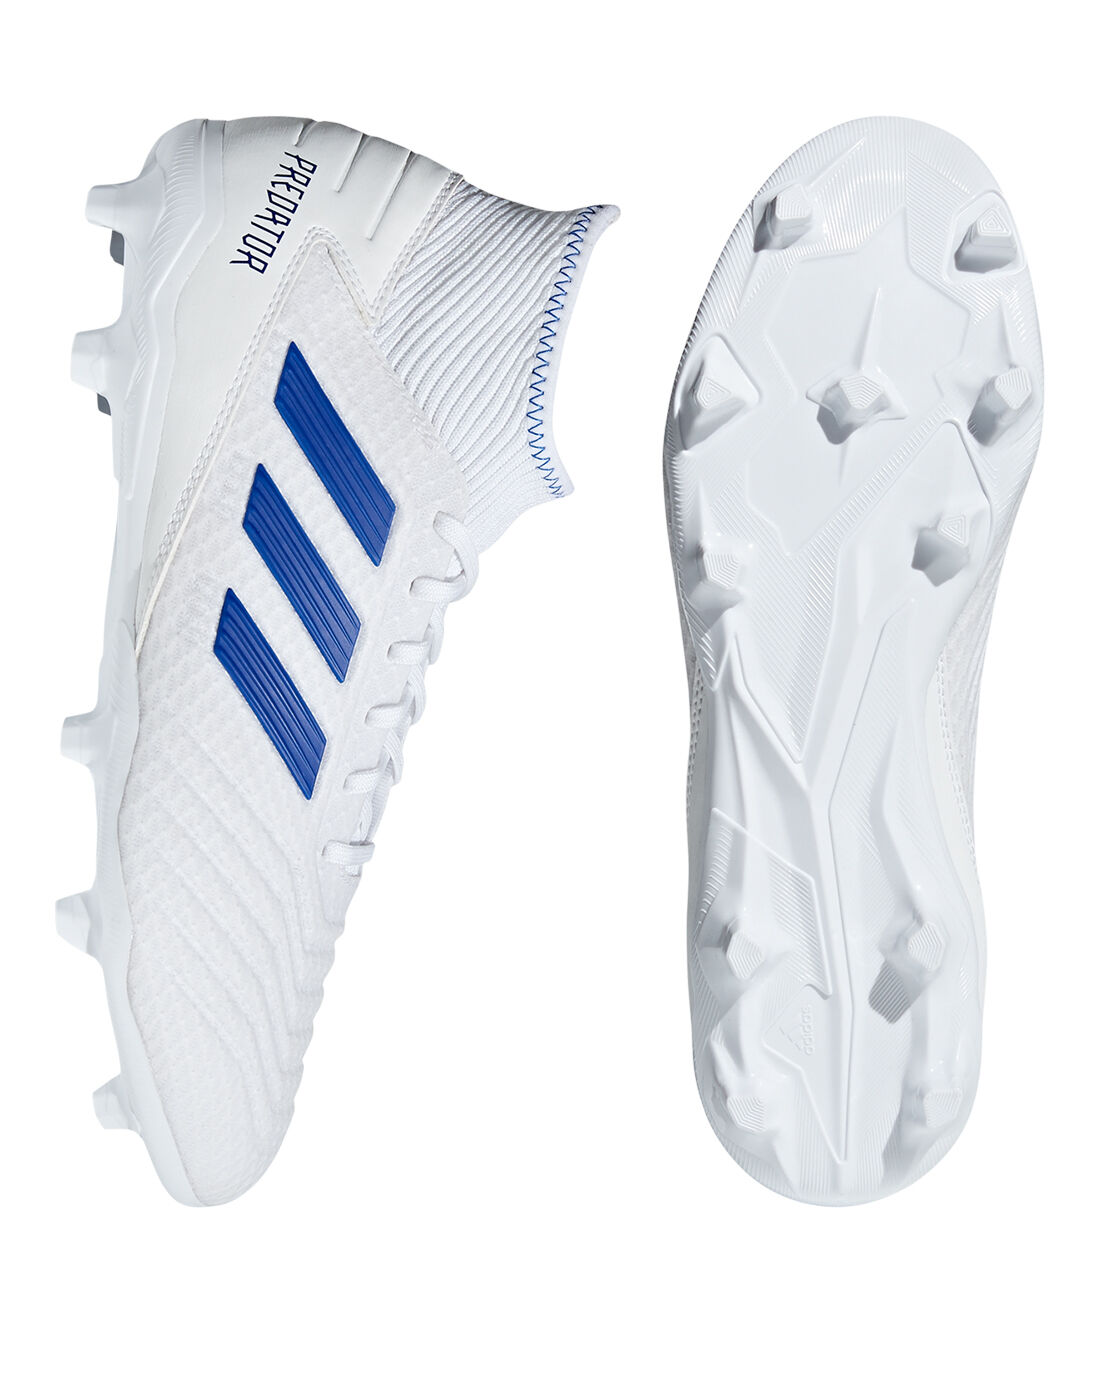 adidas predator 19.3 white and blue